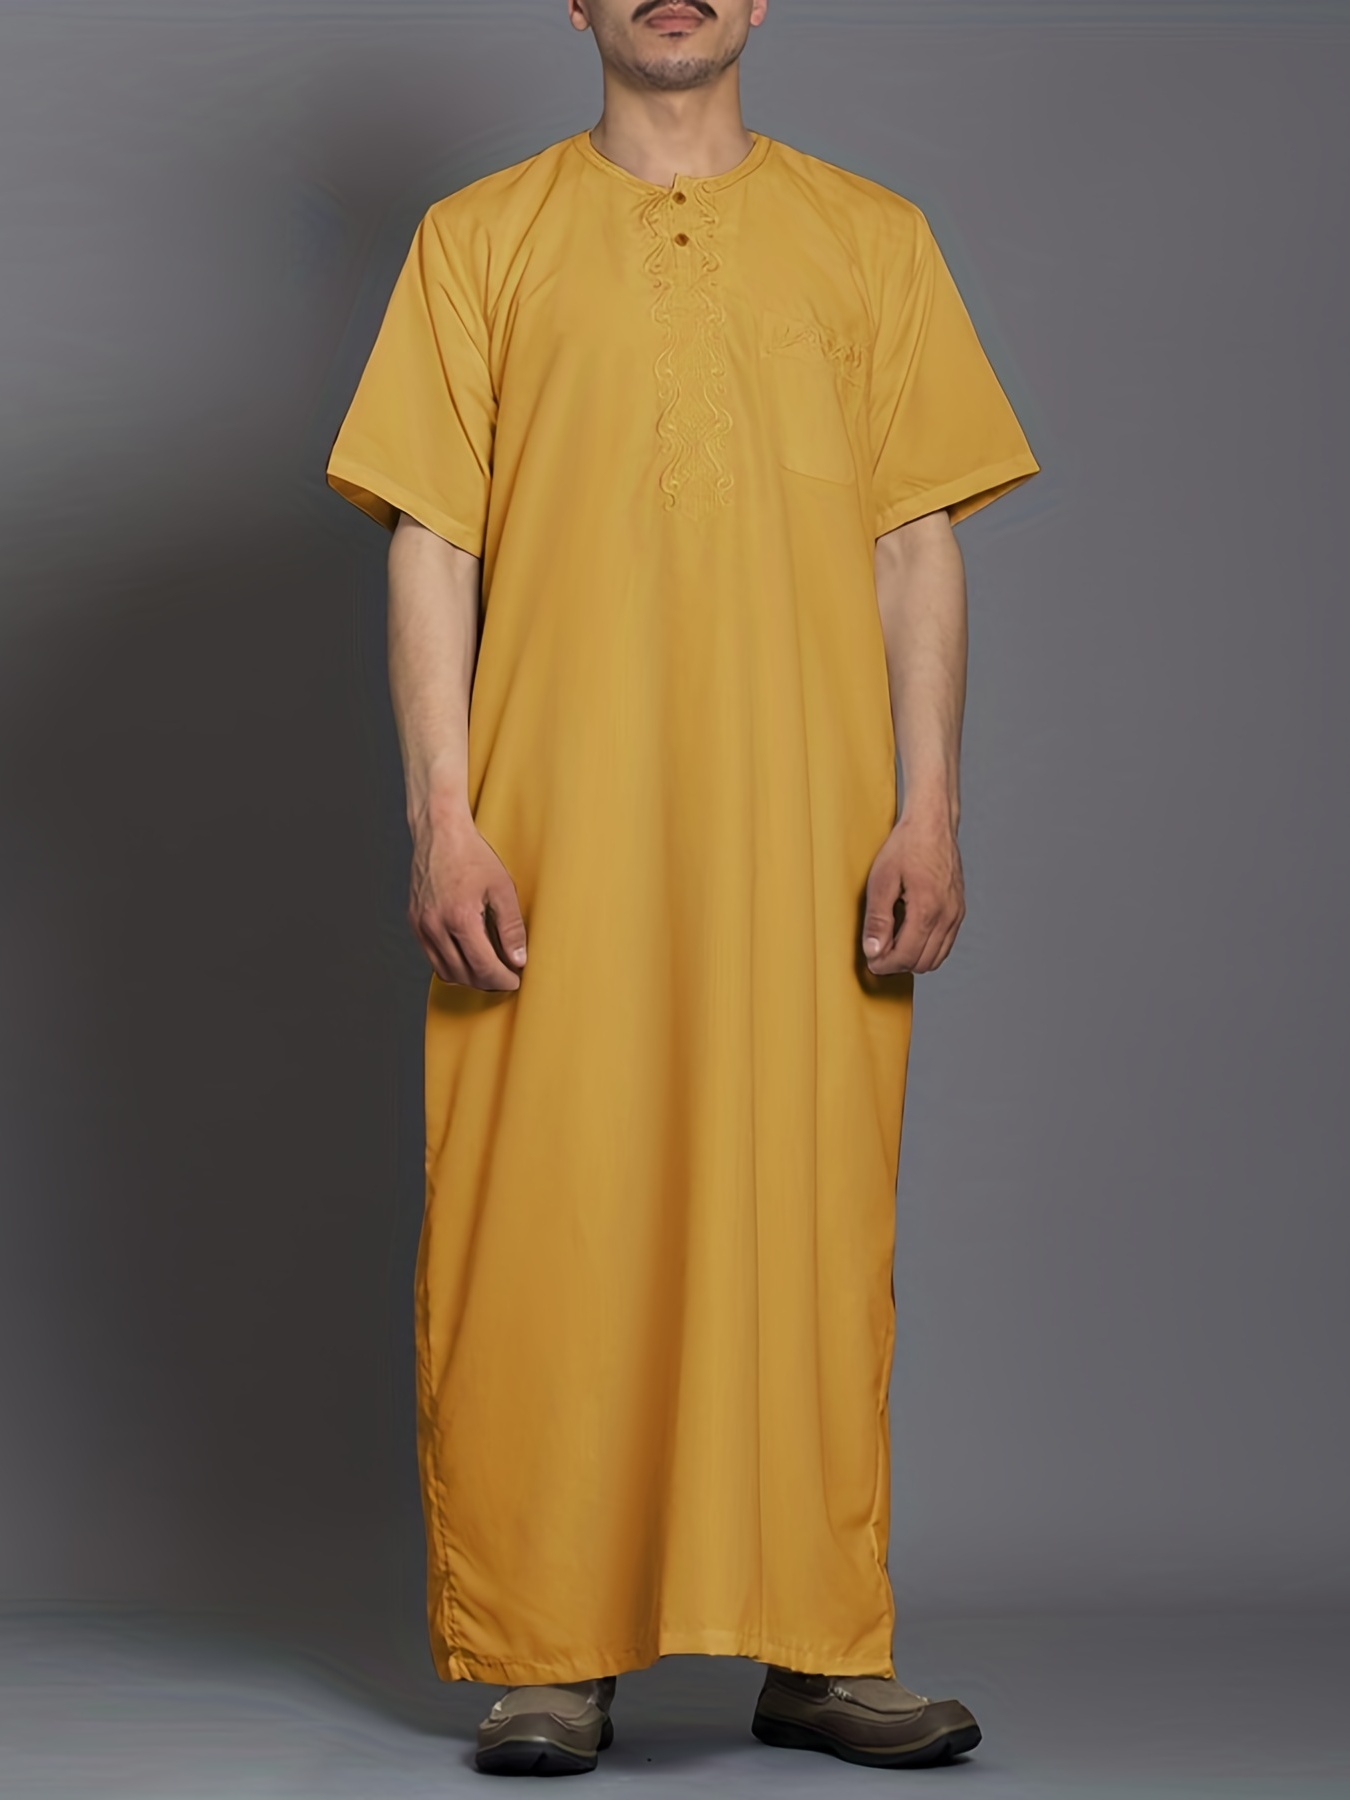 Lowest Price Vintage Muslim Kaftan Long Shirts Robes